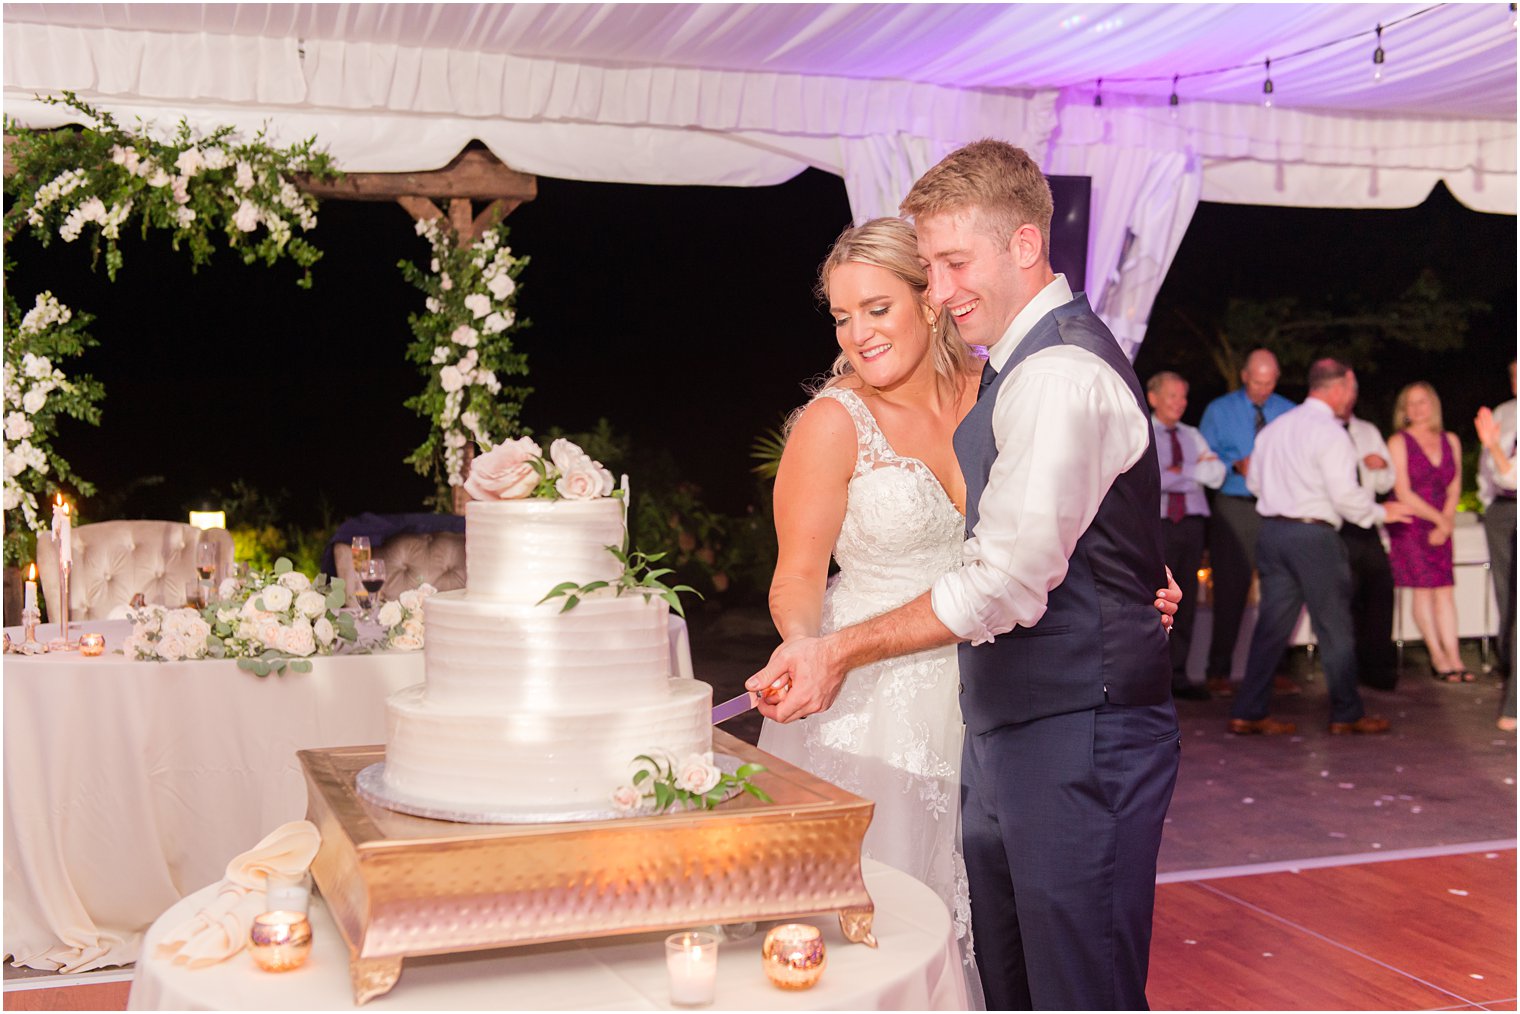 newlyweds cut wedding cake during Windows on the Water at Frogbridge Wedding reception